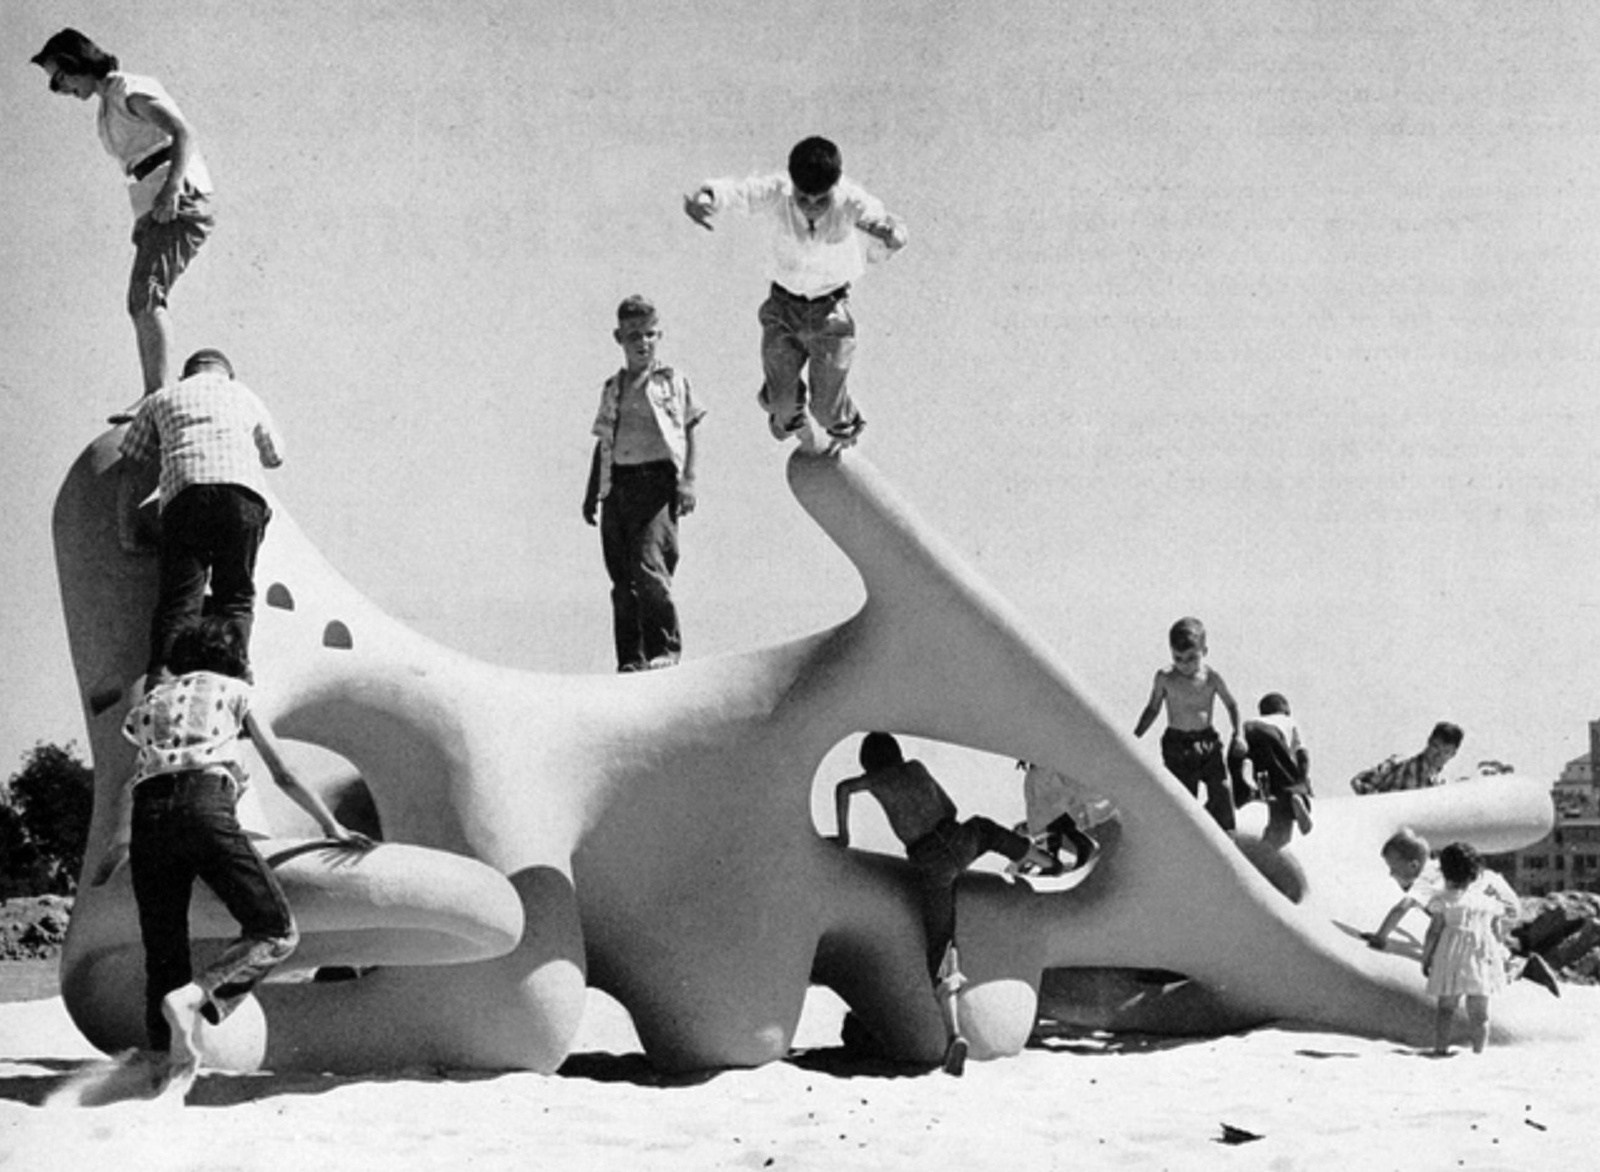 Robert Winston, Playsculpture, 1961